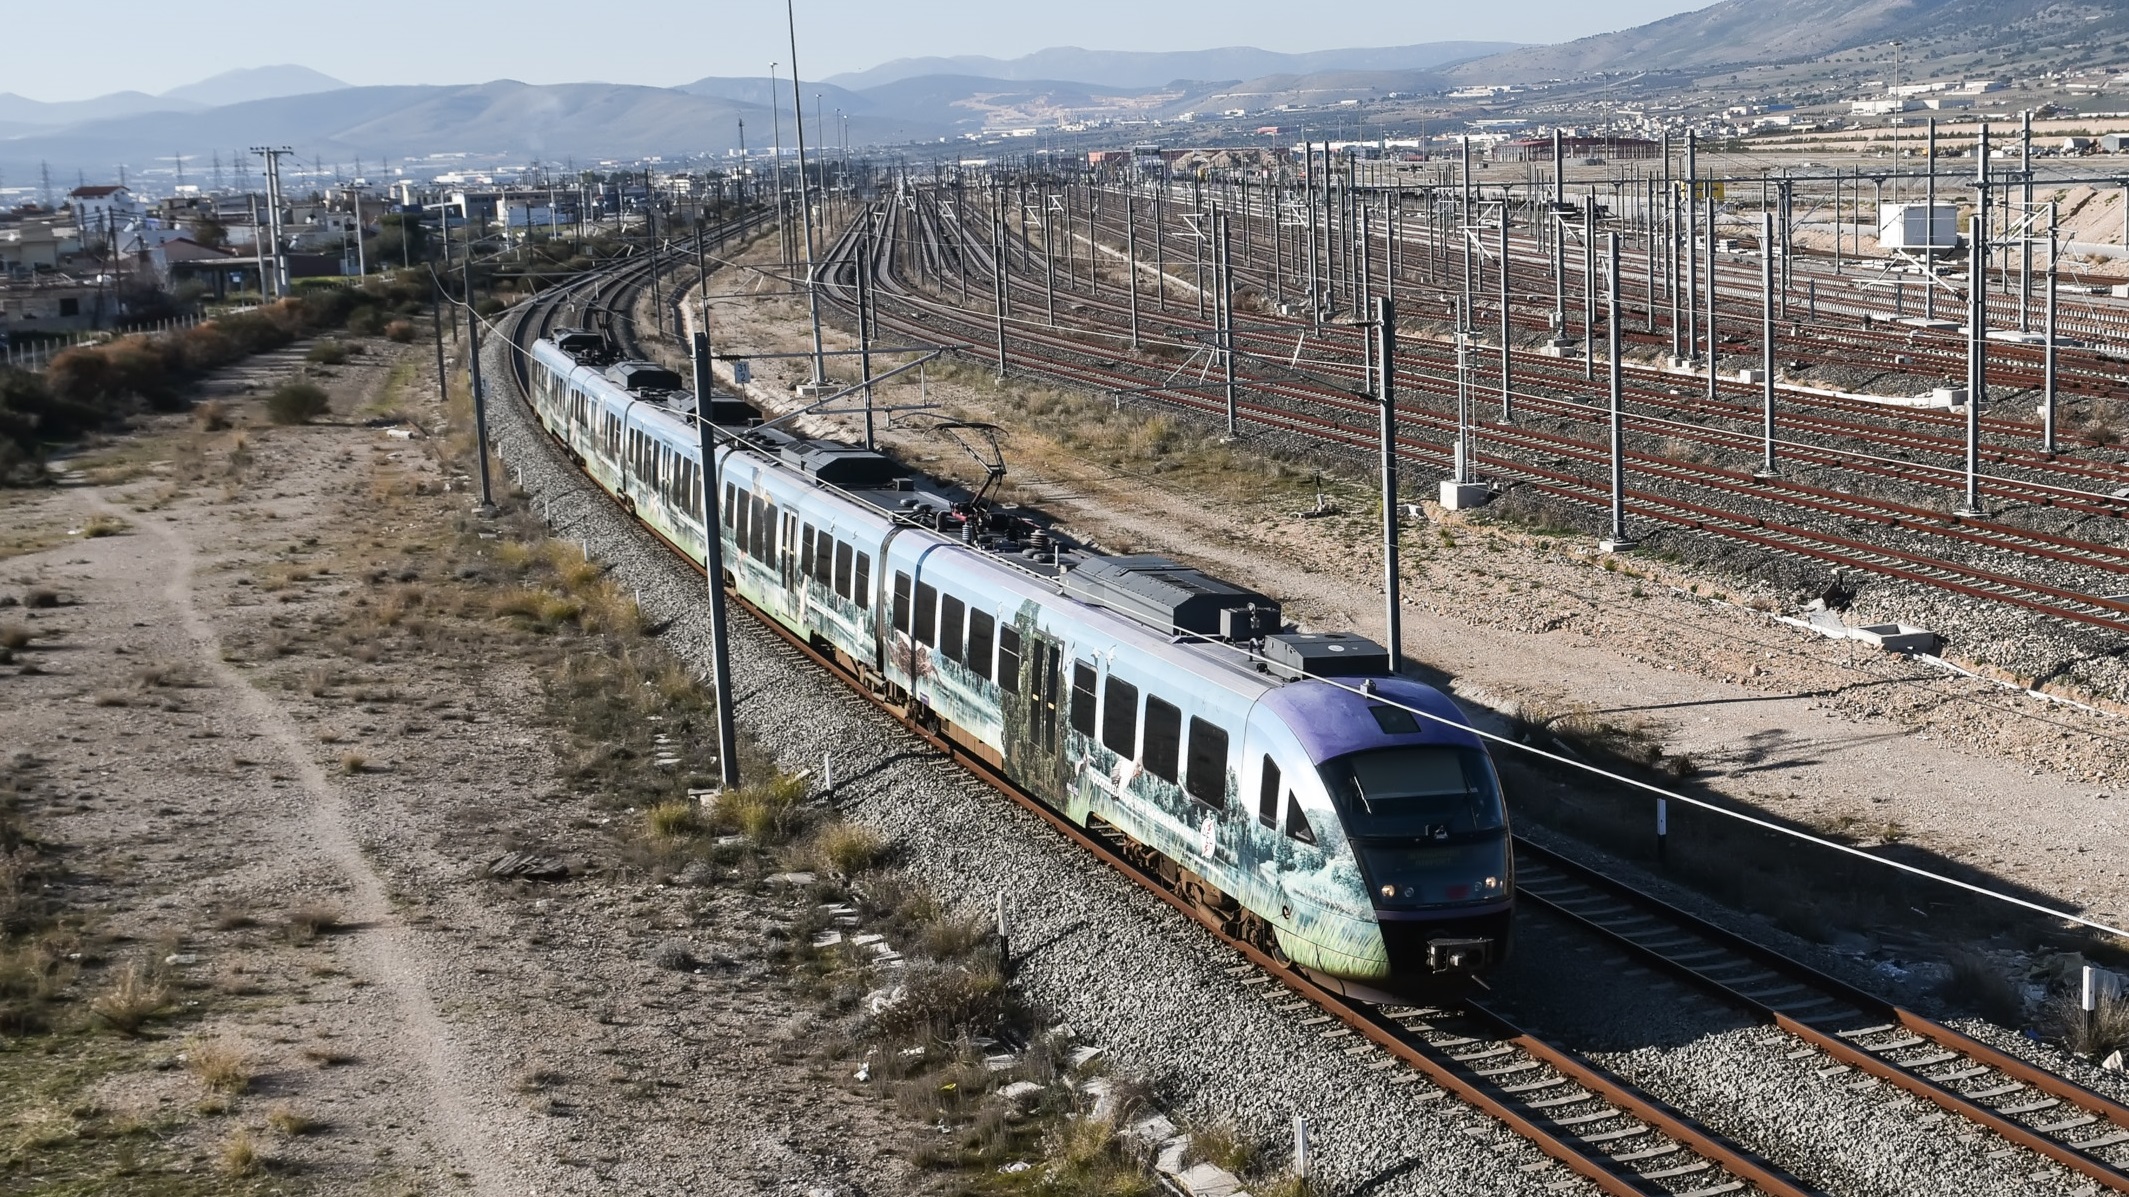 “We Reported on the Chronic Pathology of Greek Railways”